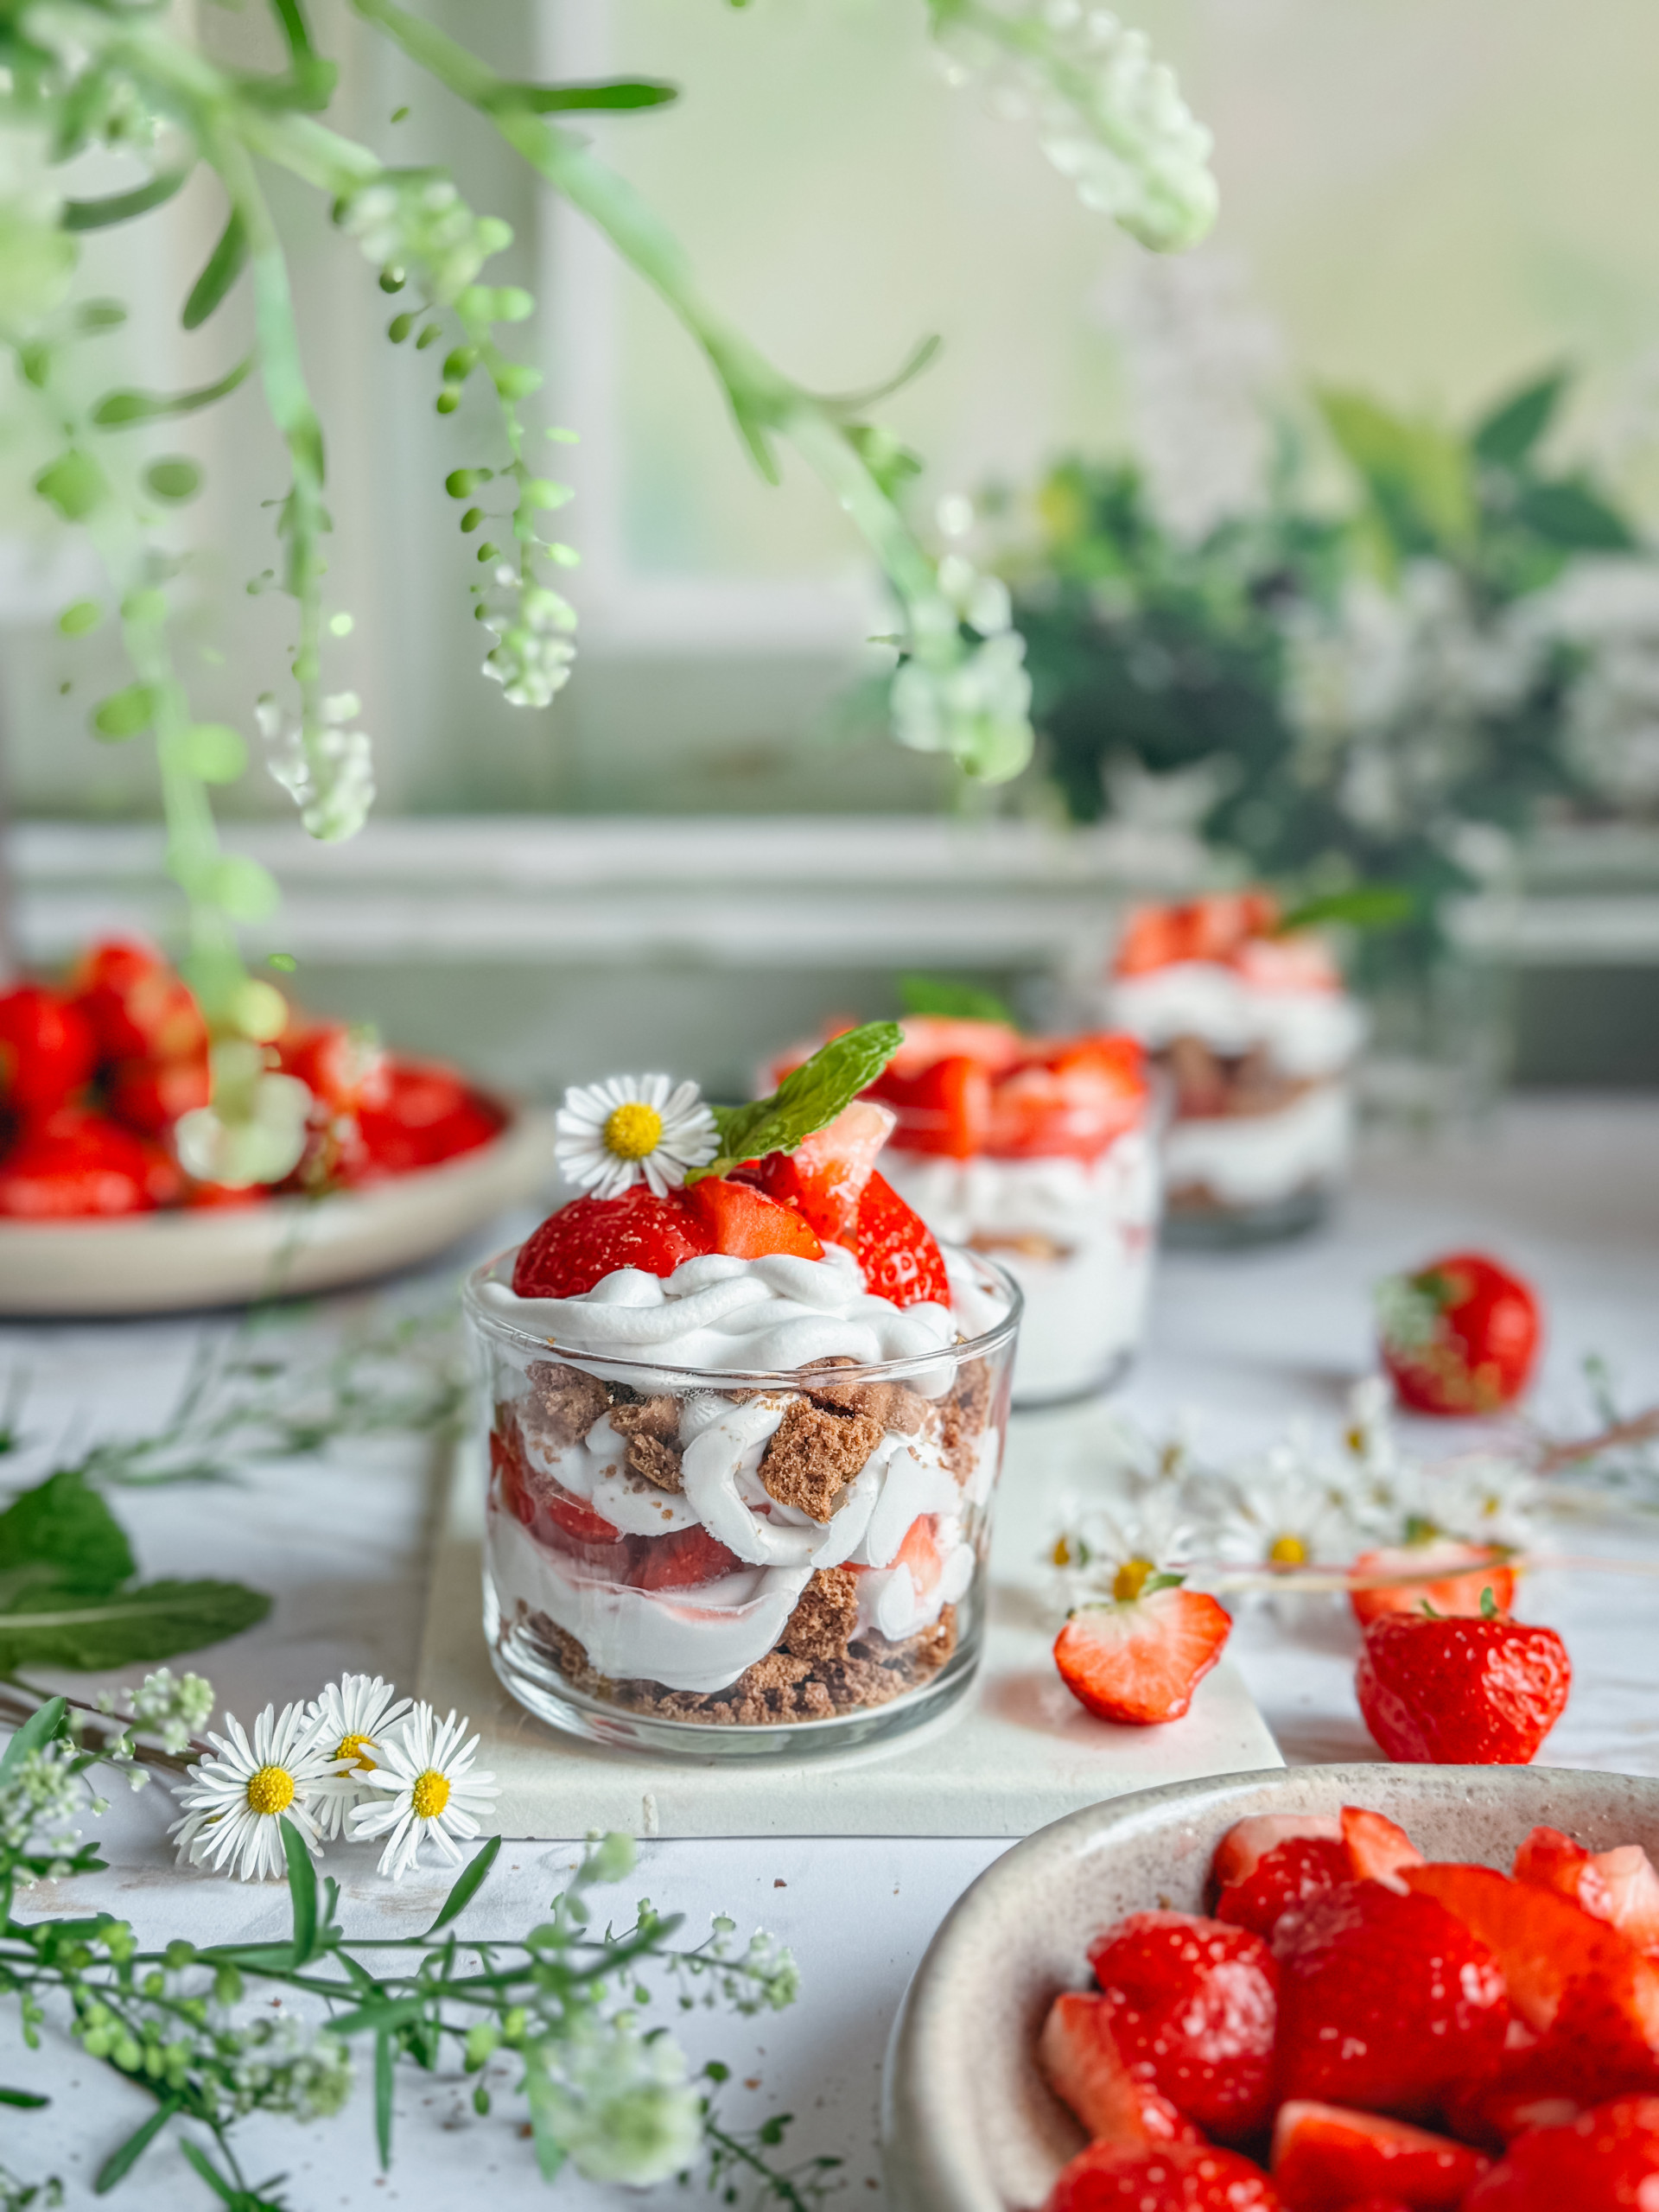 Tiramisu aux fraises sans gluten